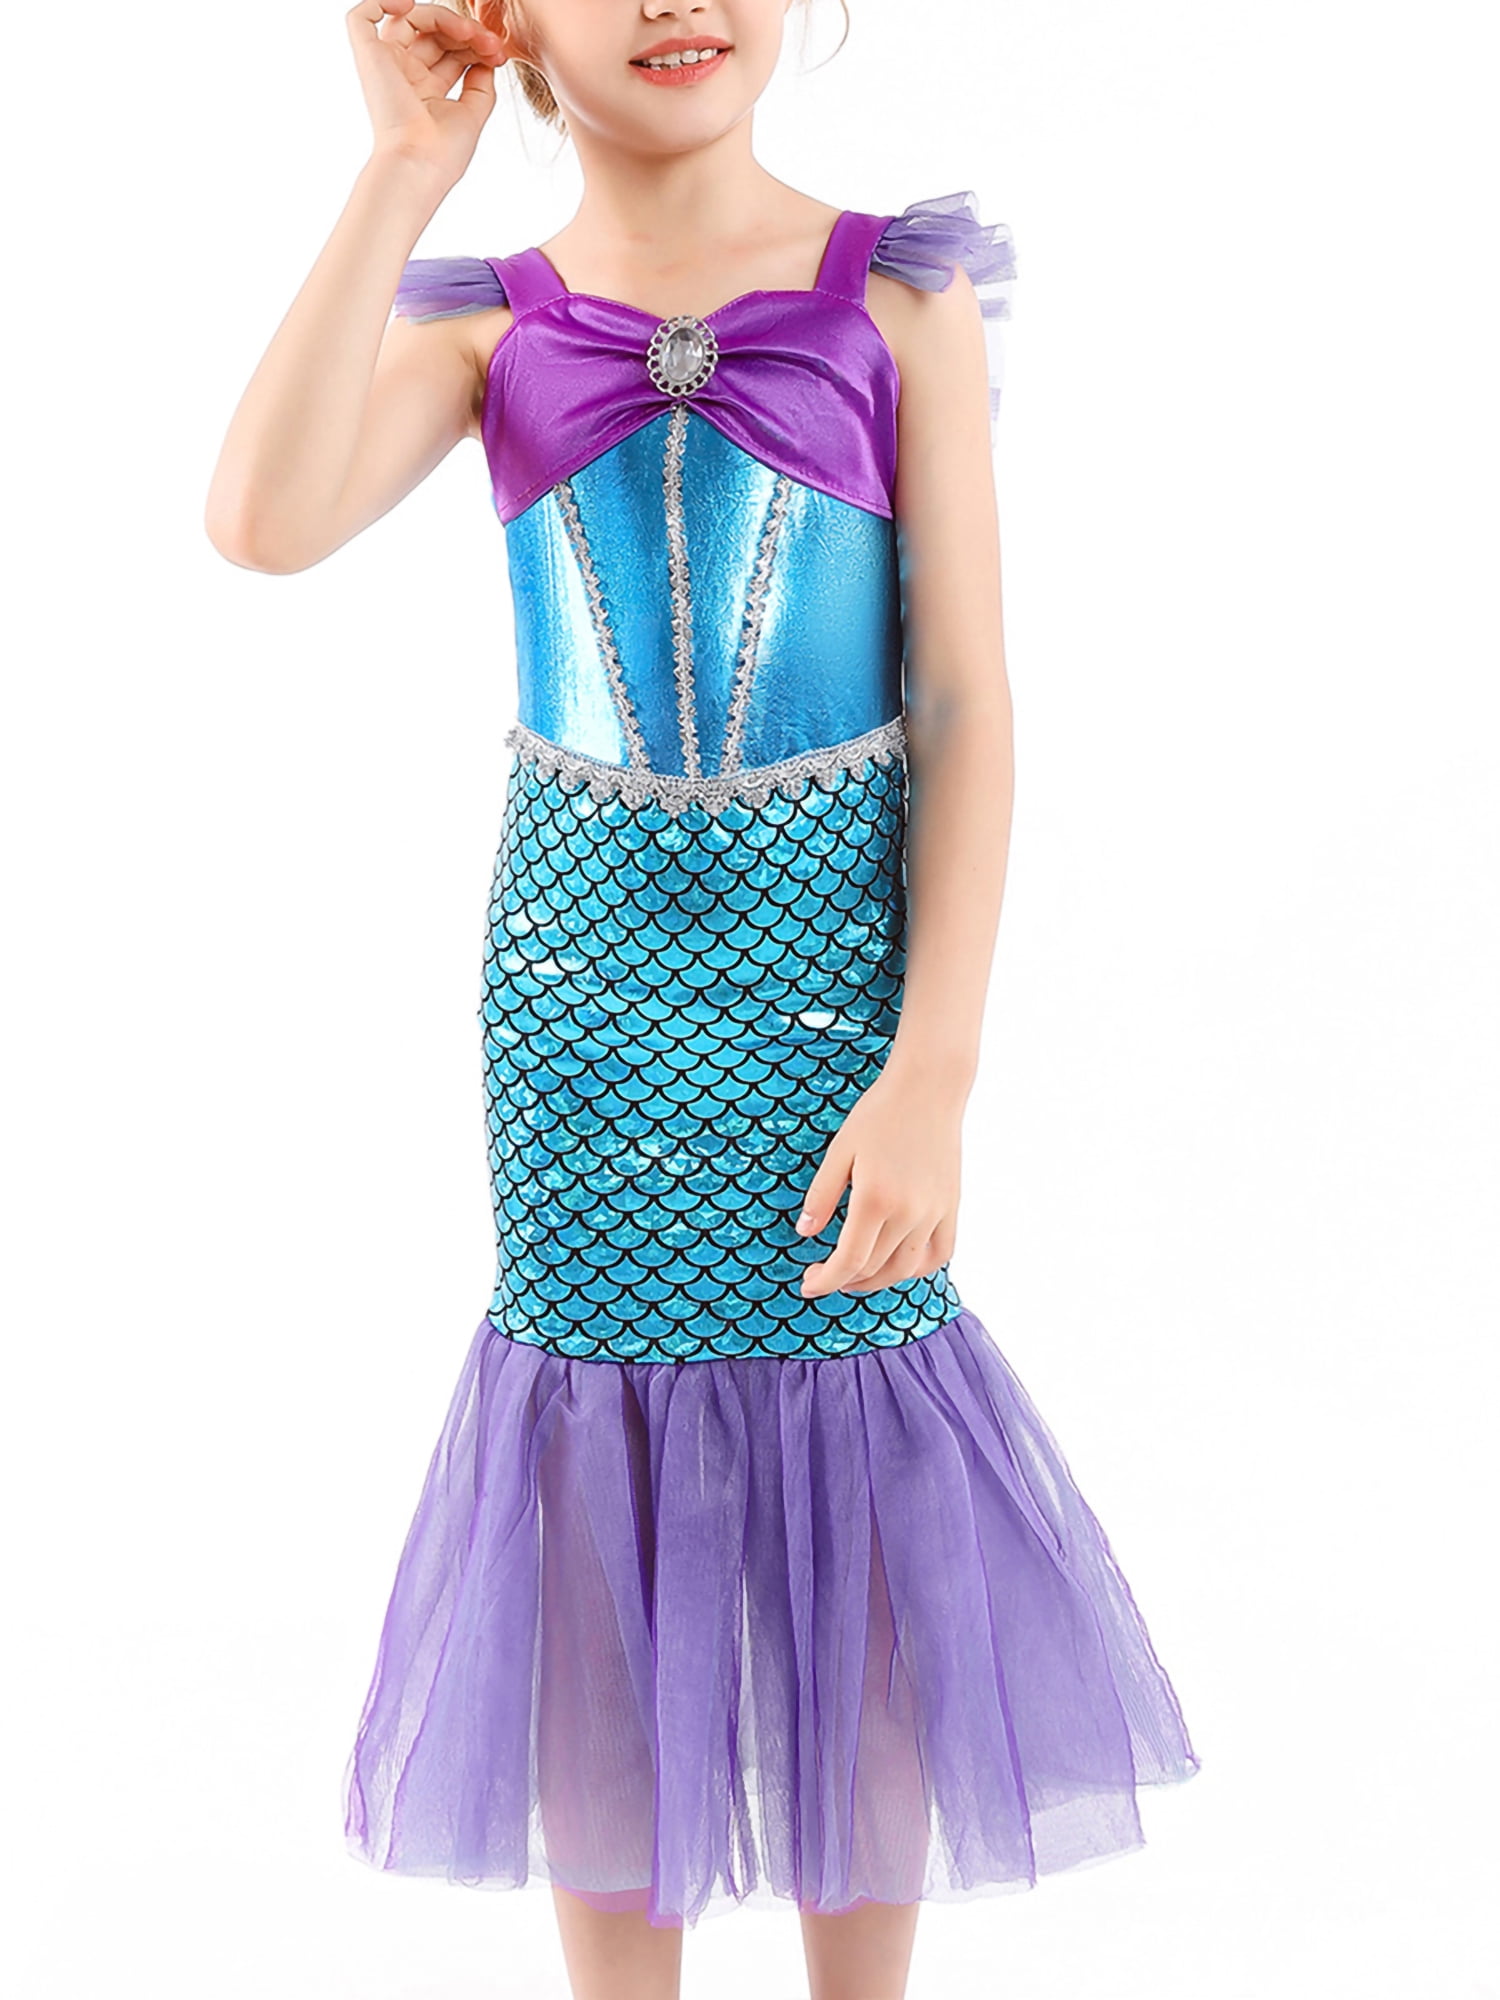 Princess Mermaid Dress Costume for Baby Toddler Girl 